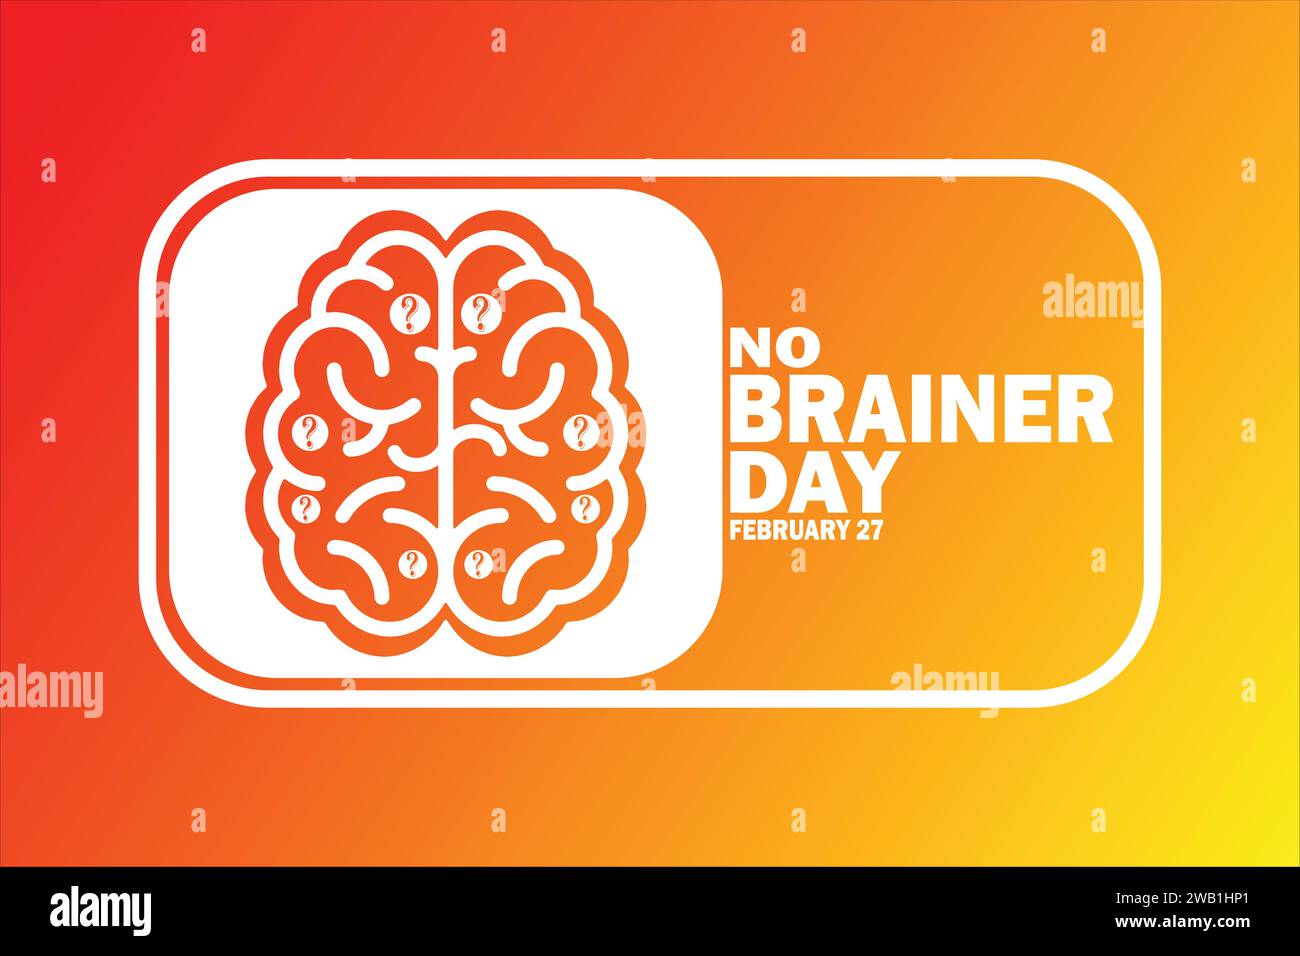 Happy No Brainer Day February 27 Stock Illustration 1922893301